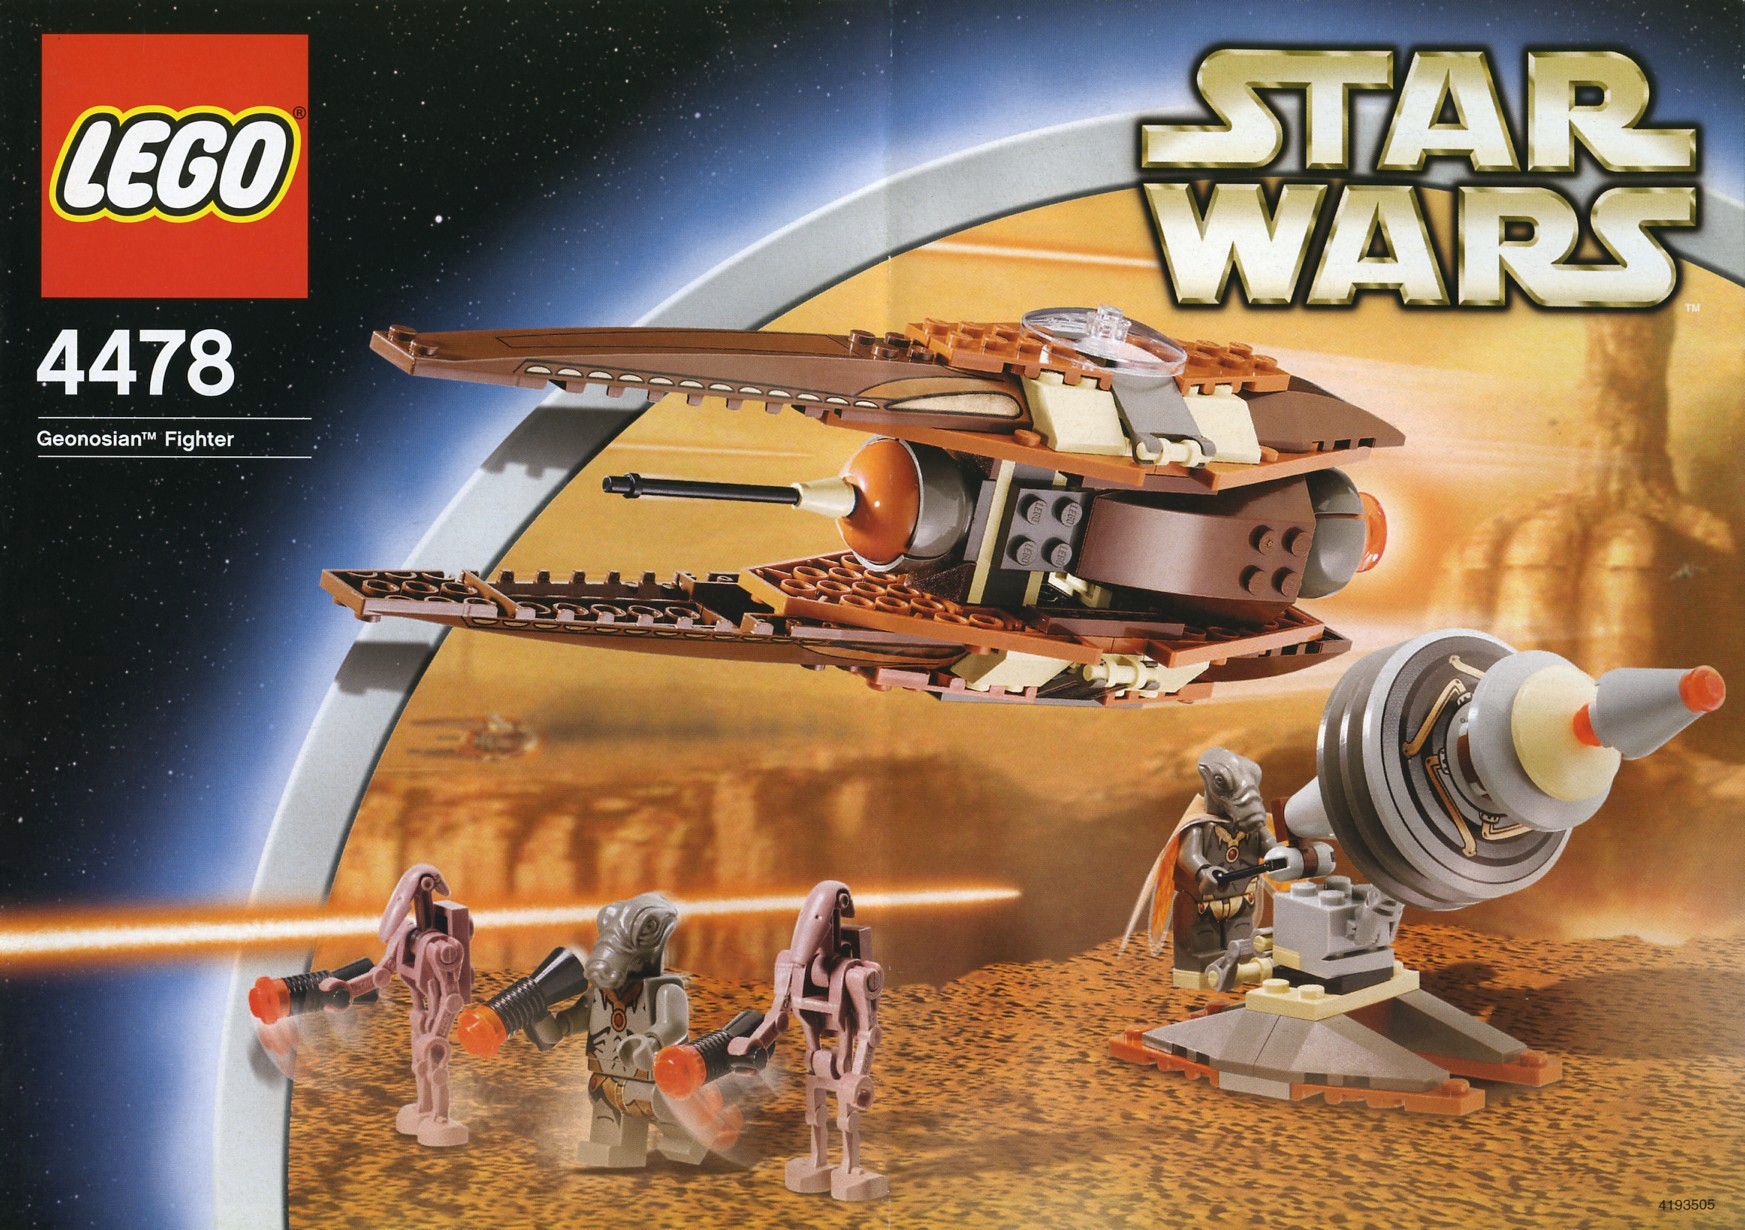 Star Wars Lego Brickset | peacecommission.kdsg.gov.ng